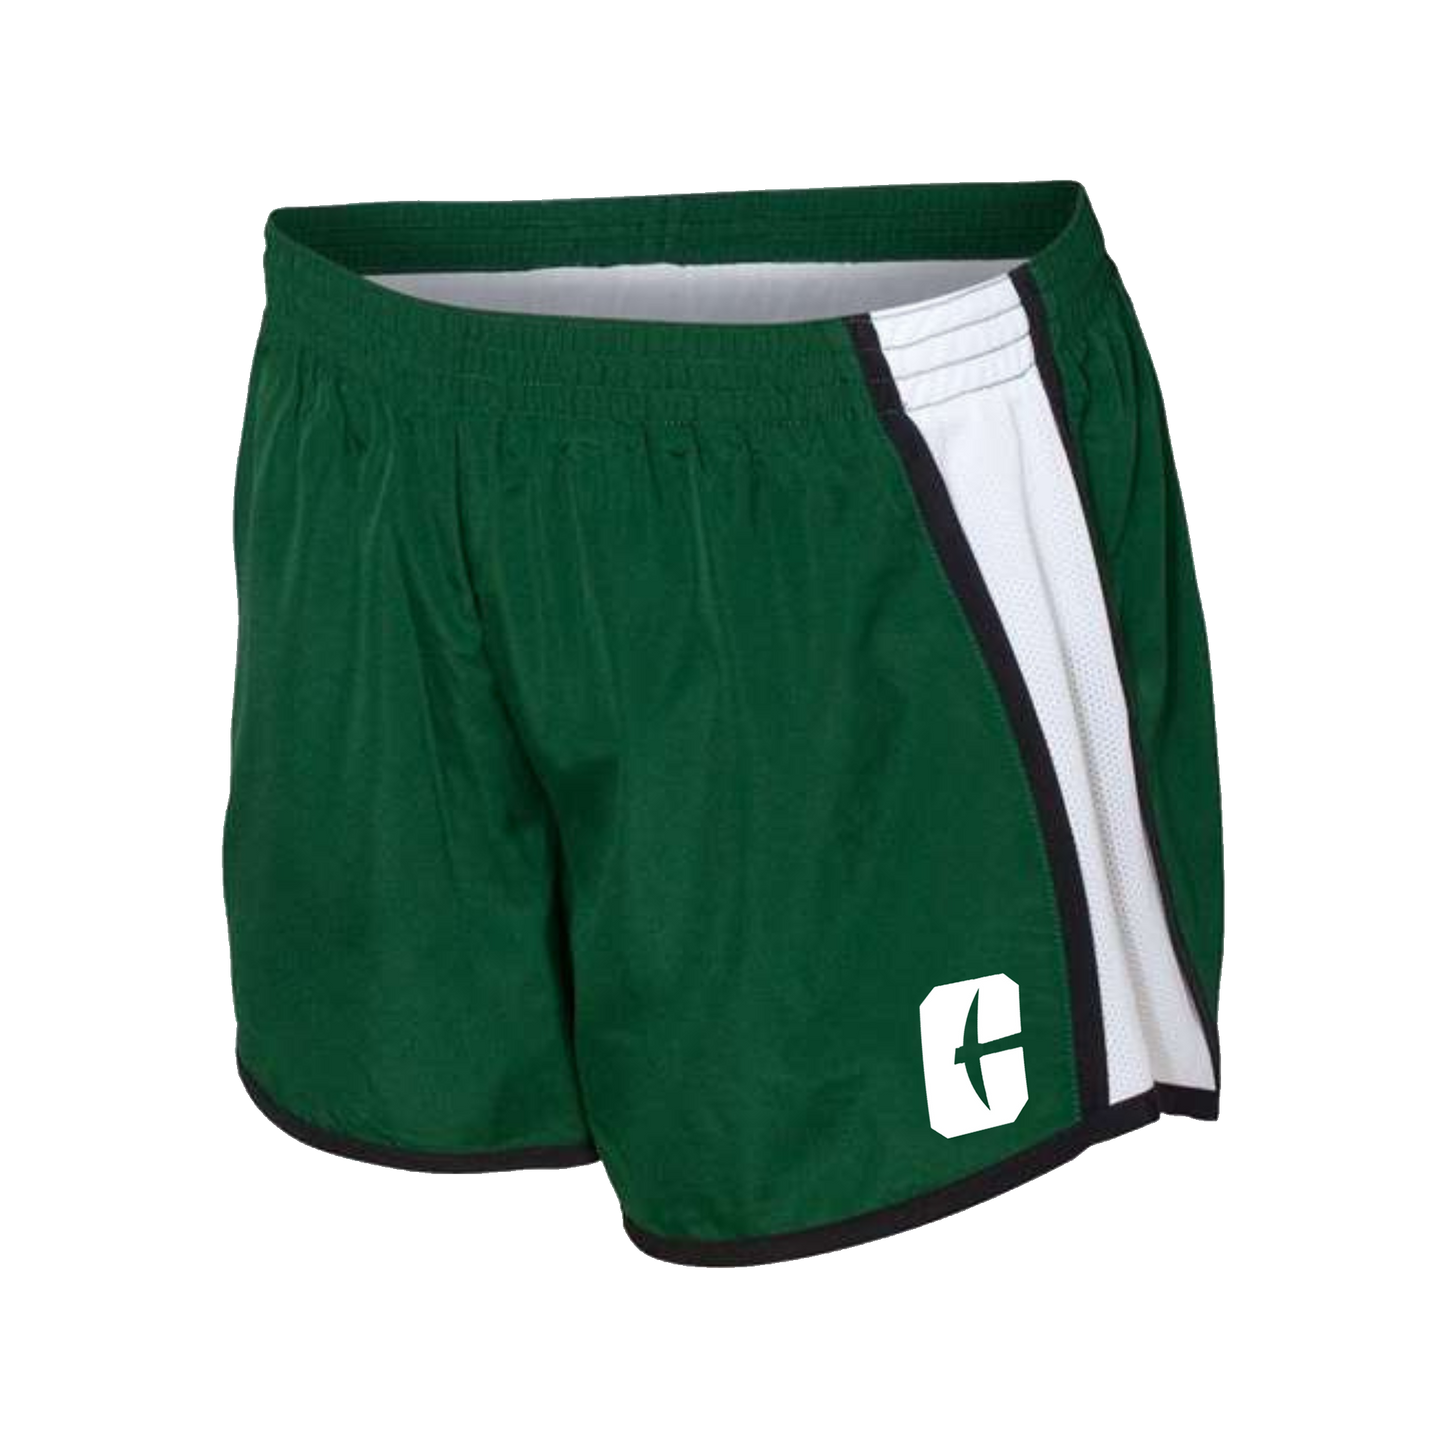 Women's "C" Logo Green Athletic Shorts